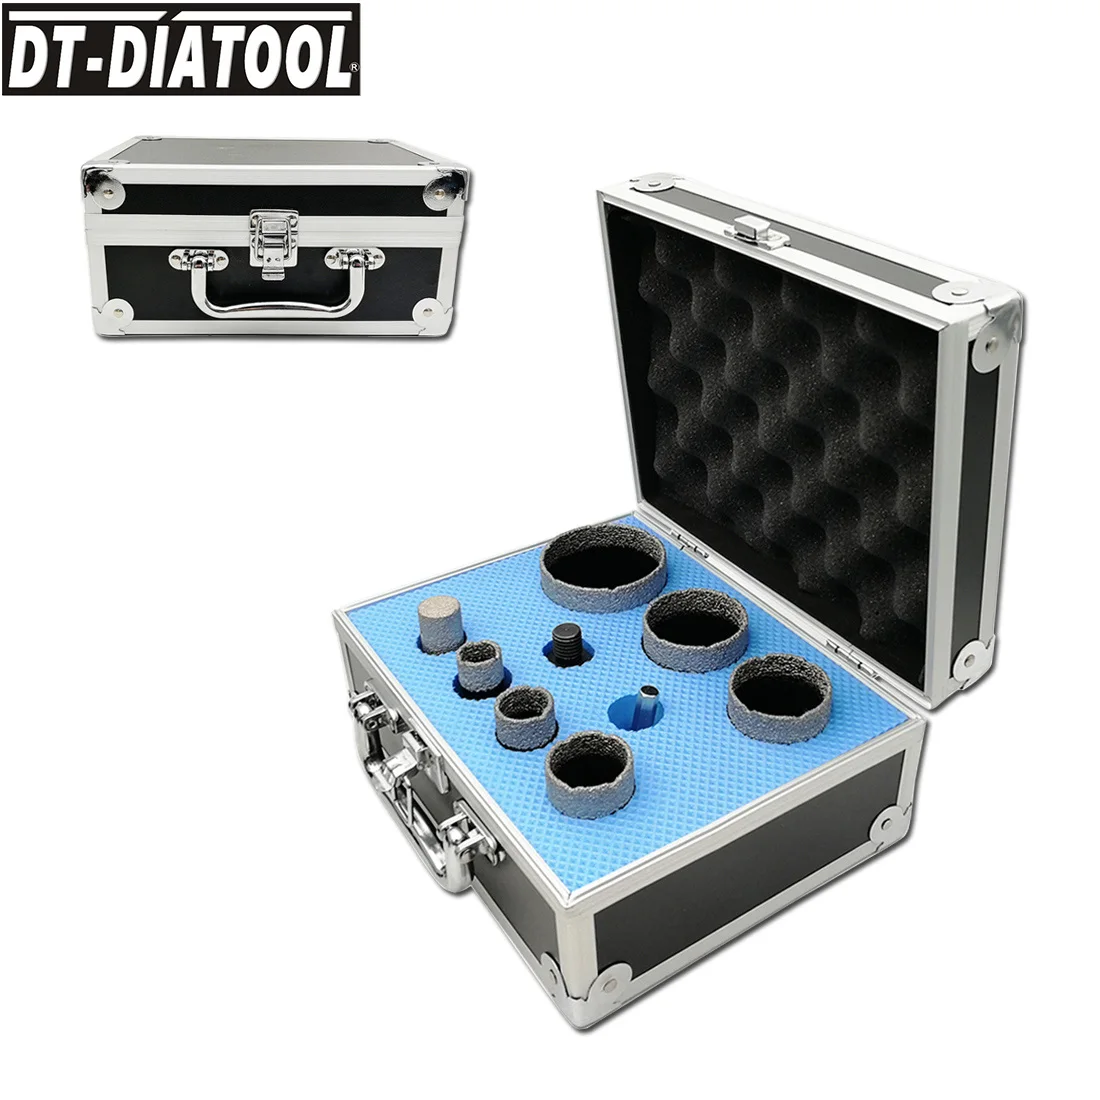 DT-DIATOOL 9pcs/kit Vacuum Brazed Diamond Drilling Core Bits Sets Hole Saw Mixed size plus Finger Bits Adapter M14 Connection